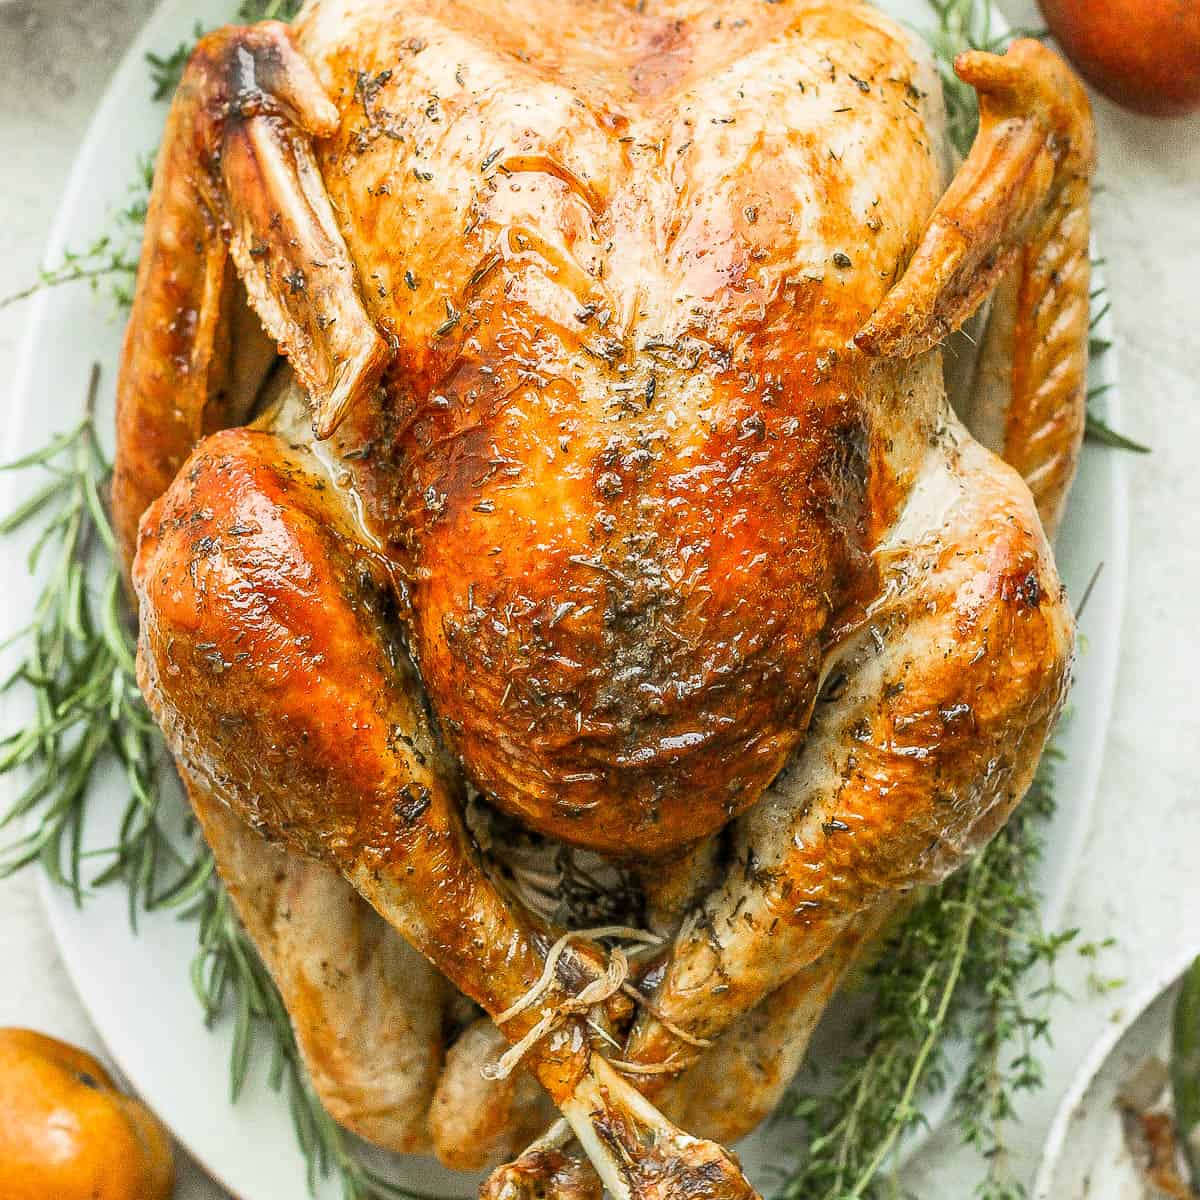 https://thewoodenskillet.com/wp-content/uploads/2022/09/thanksgiving-turkey-recipe-18.jpg